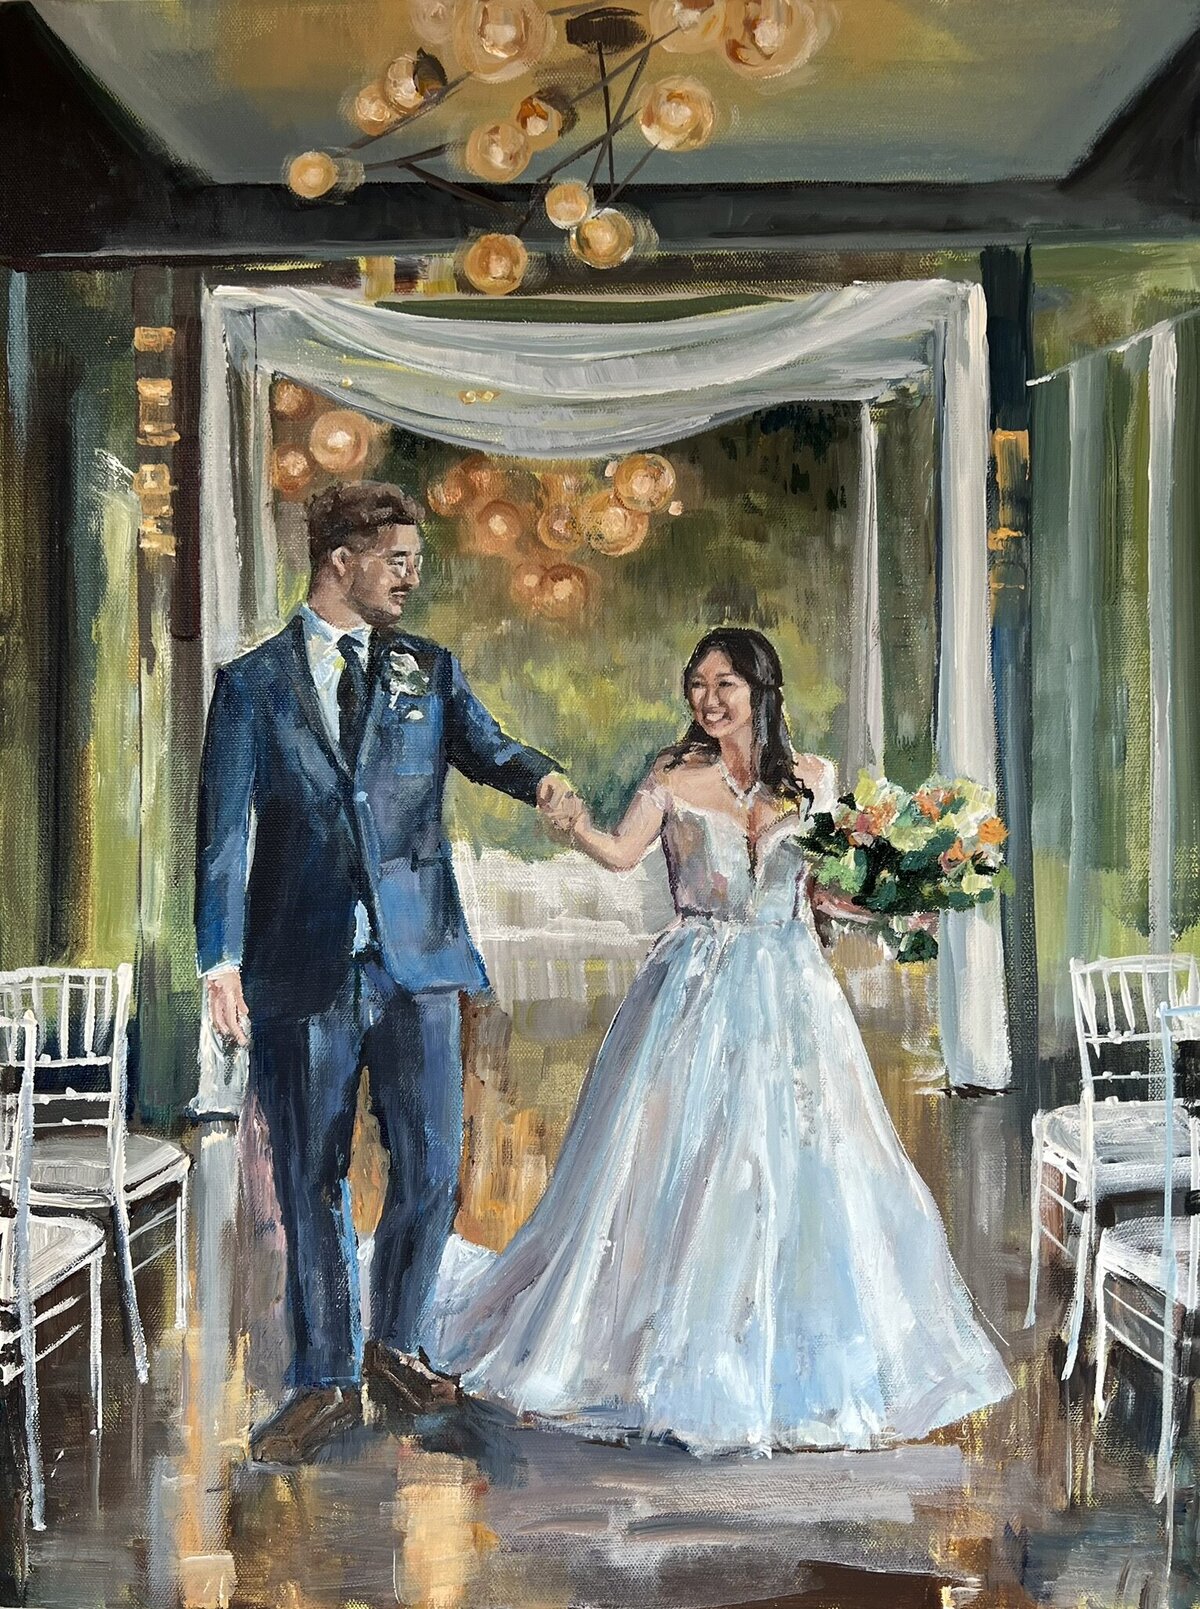 Canoe restaurant live wedding painting